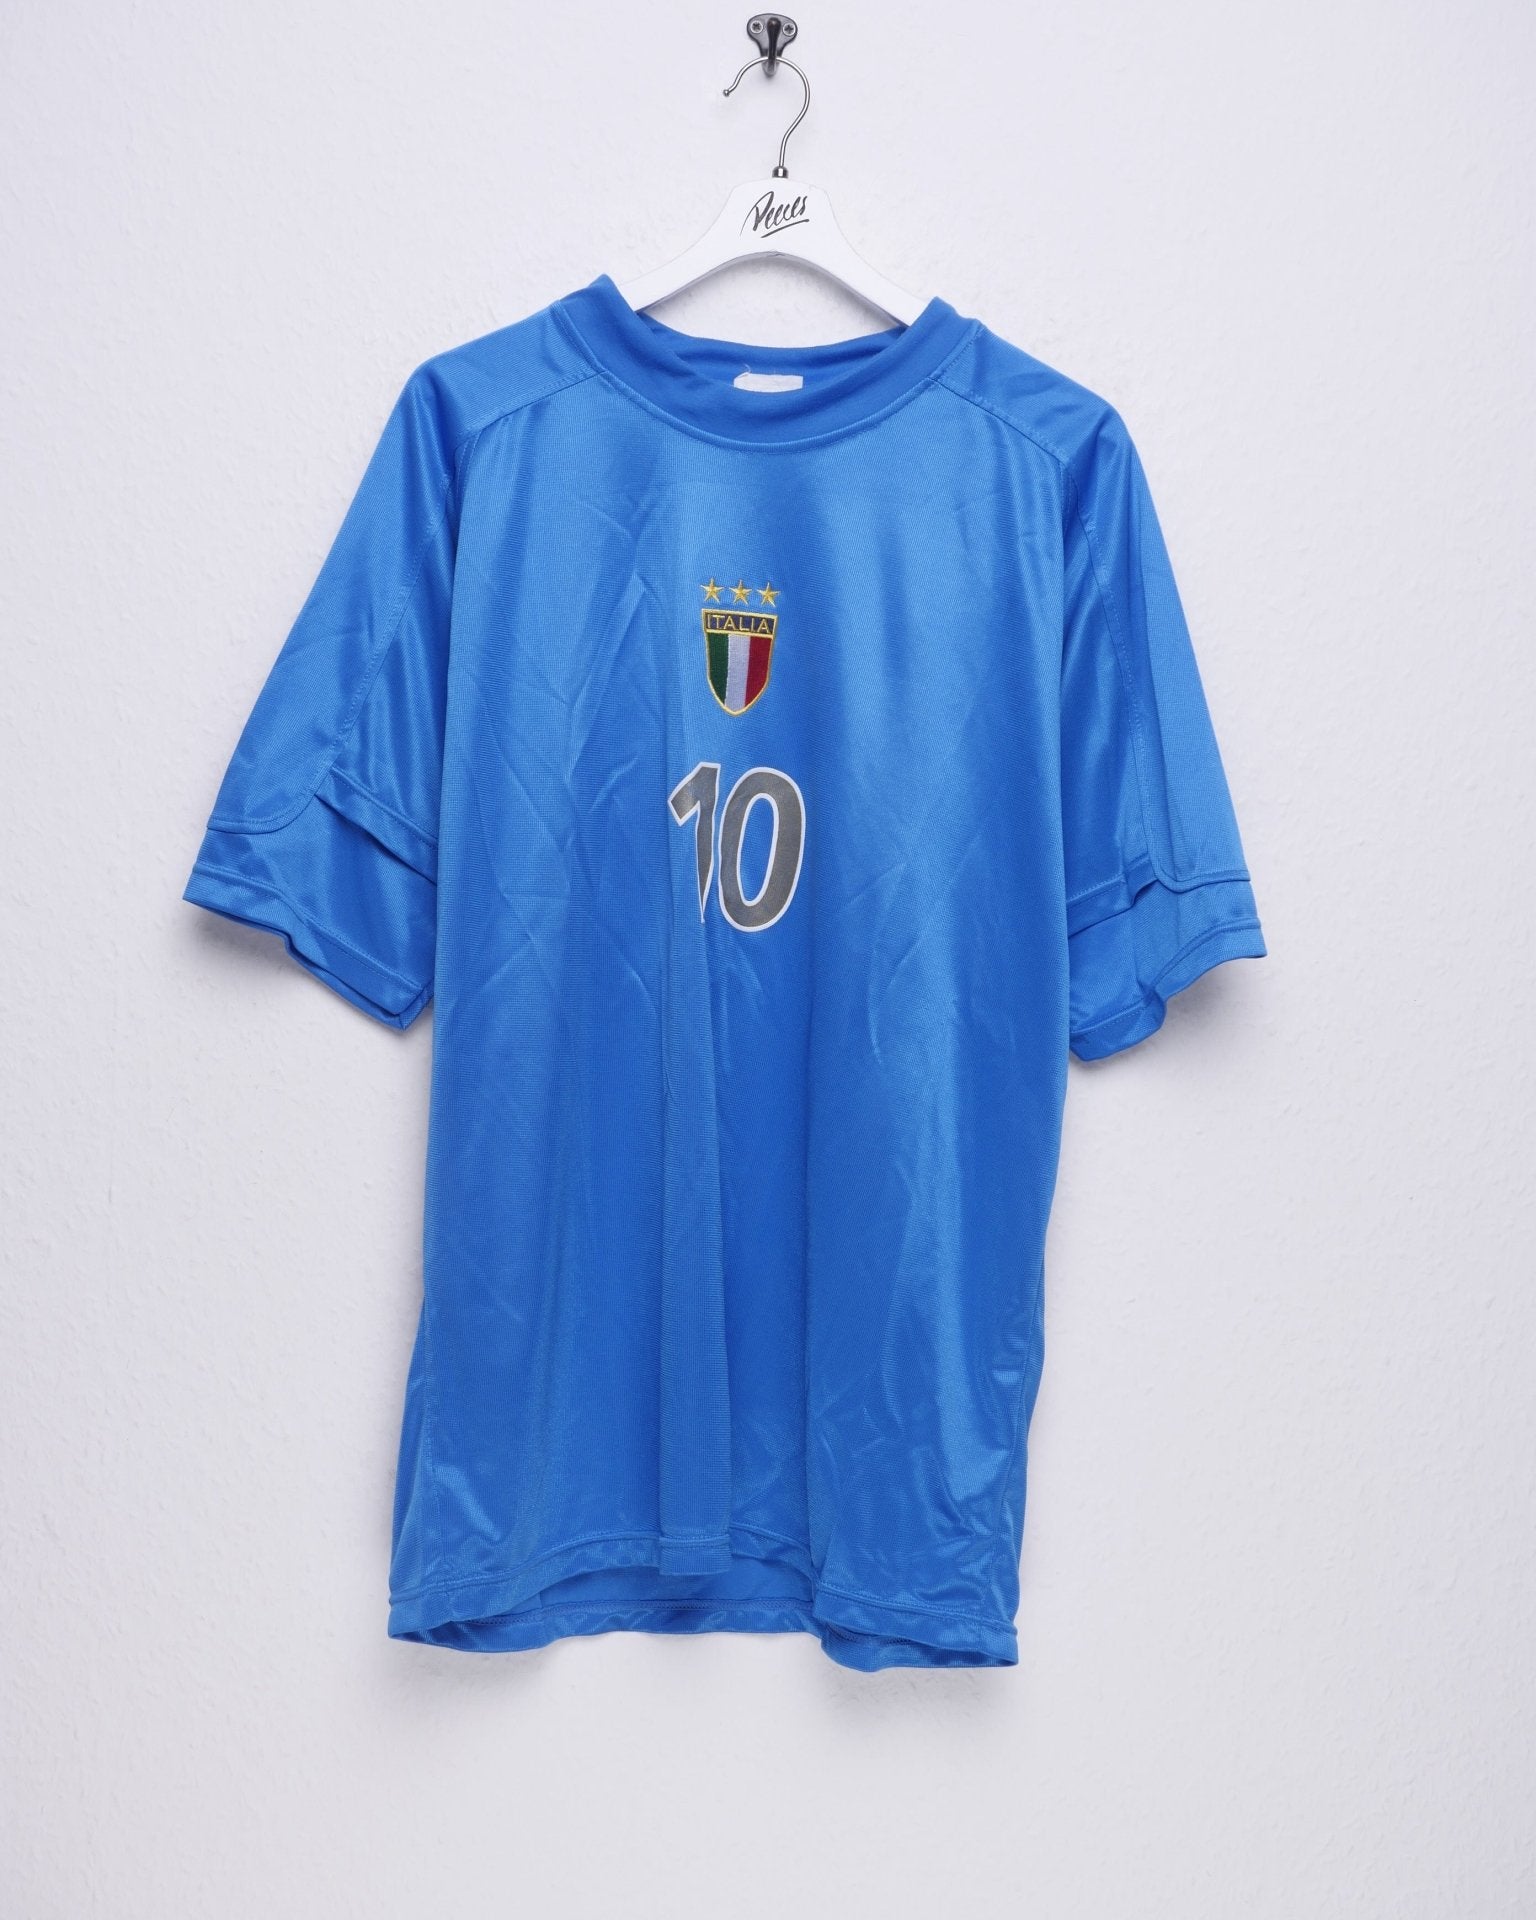 Italia embroidered Logo Vintage Jersey Shirt - Peeces